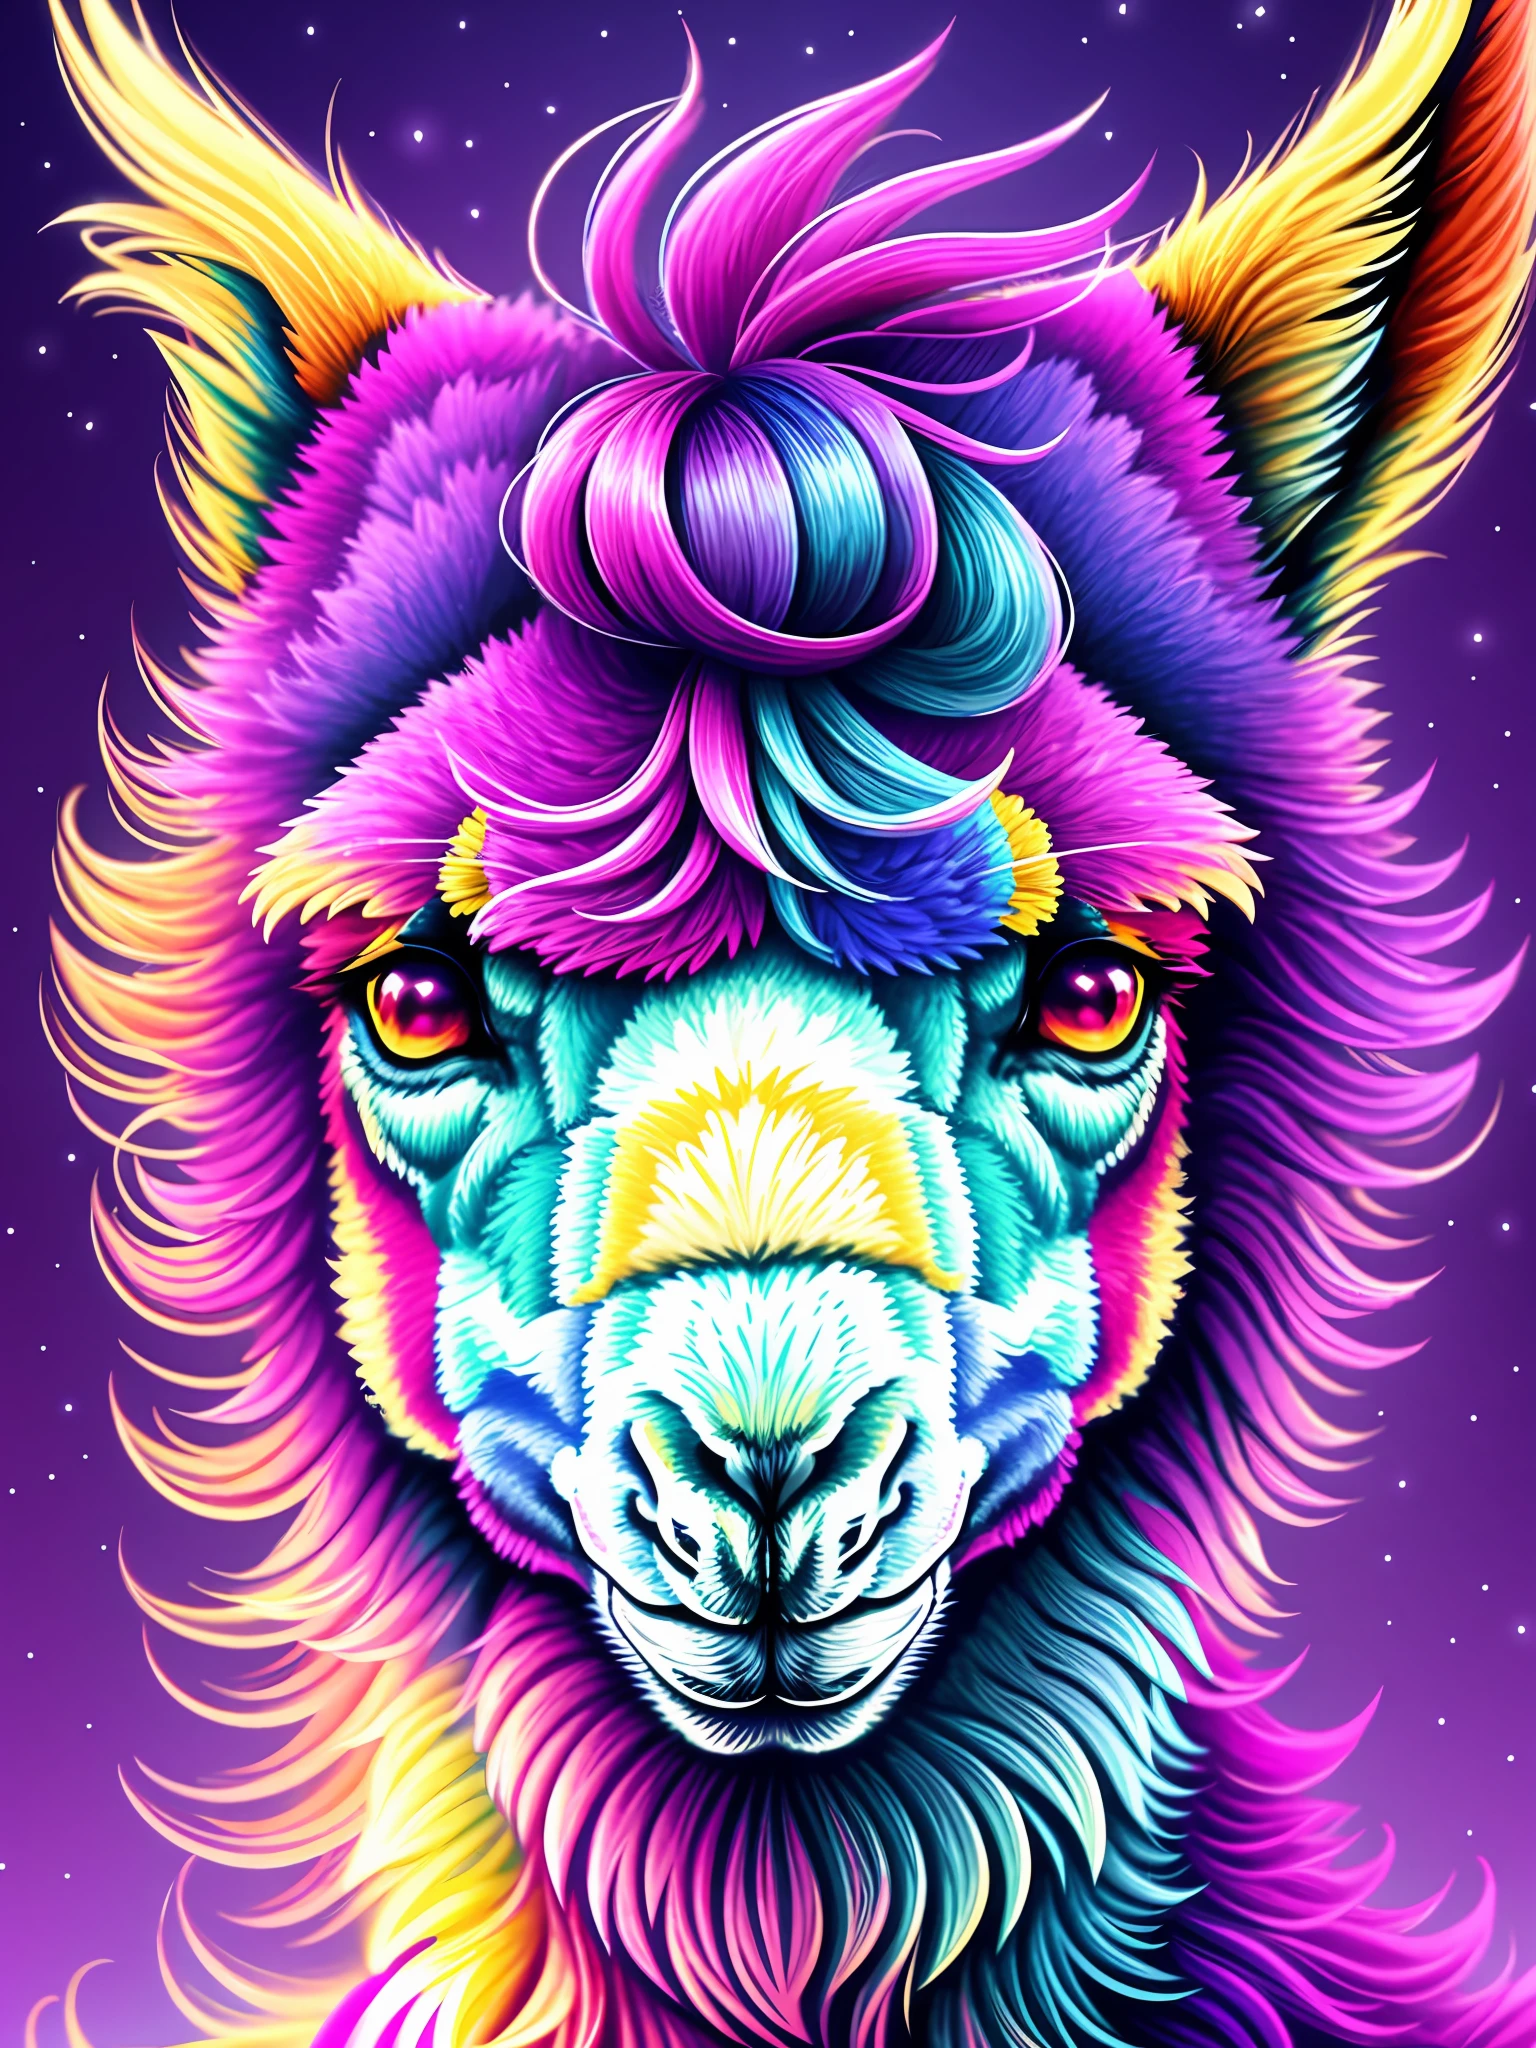 Vivid Color Llama, 4K Detailed Digital Art, AMOLED Wallpaper, Highly Detailed 4K Digital Art, Beautiful 4K UHD Art, High Detailed Colors, Colorful Digital Fantasy Art, AMOLED, High Quality 8K Detailed Art